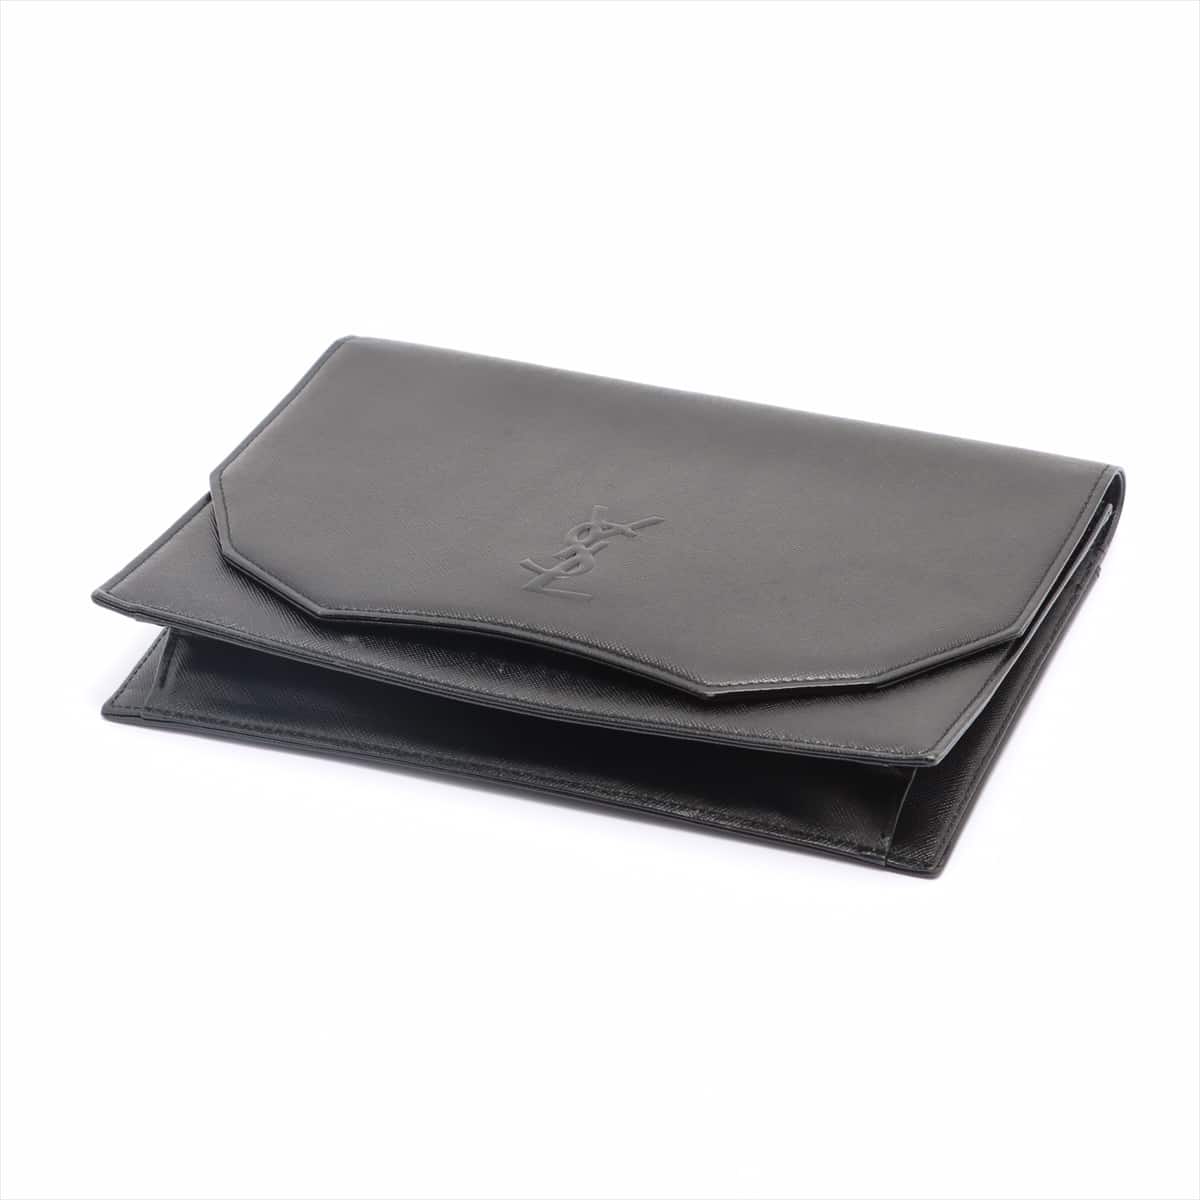 Yves Saint-Laurent Leather Clutch bag Black